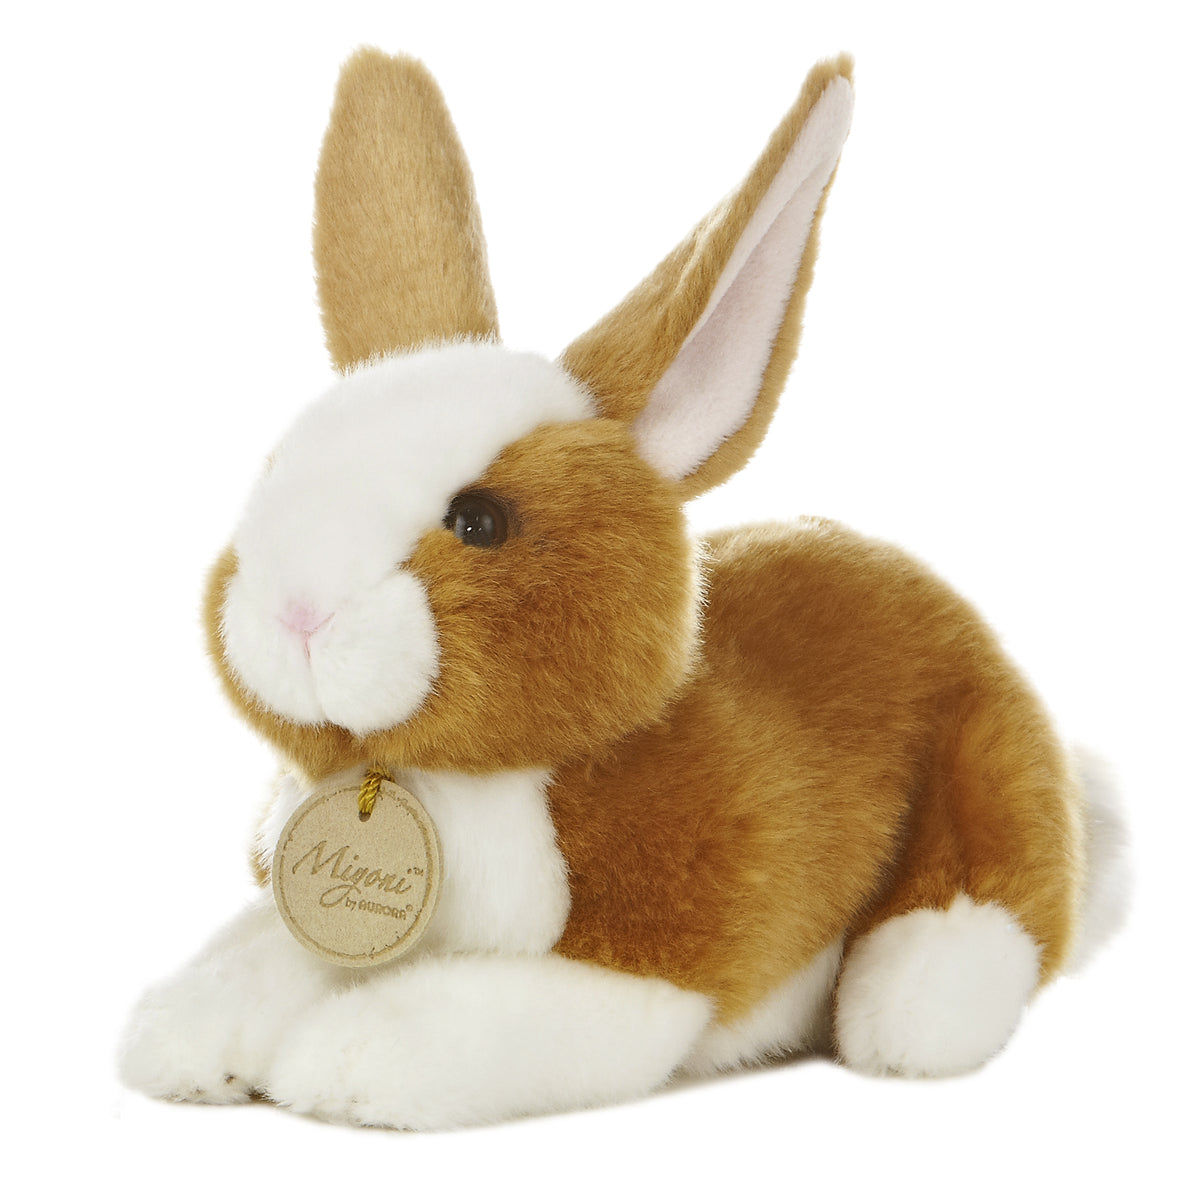 Dutch Rabbit plush from Aurora's Miyoni, showcasing detailed white and brown fur